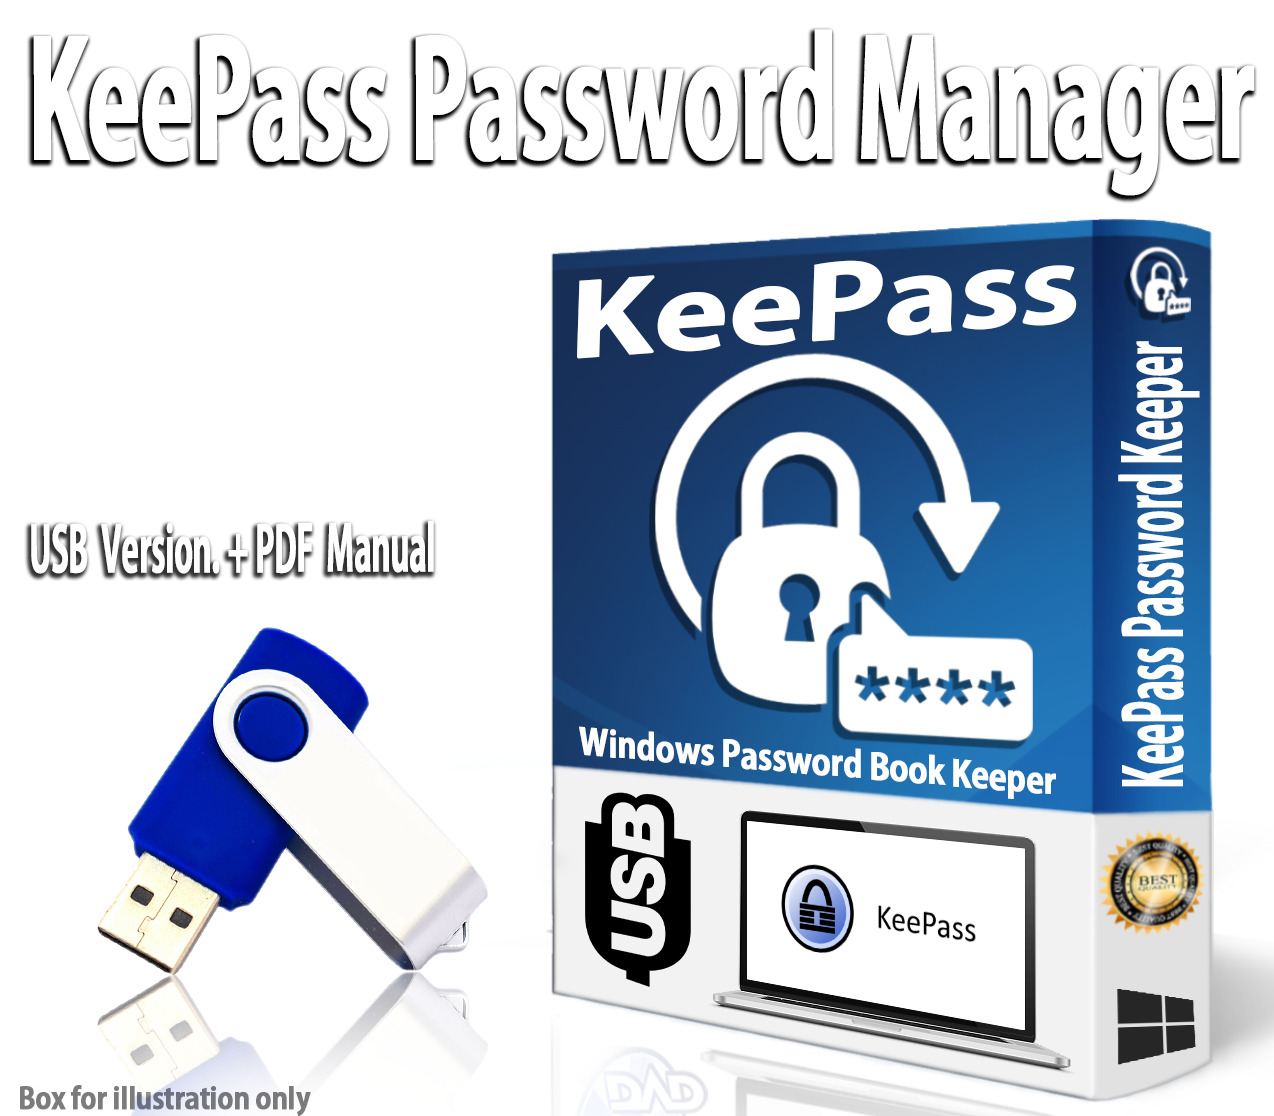 KEE PASS SECURE PASSWORD MANAGER | KeePass Password Encryption | USB